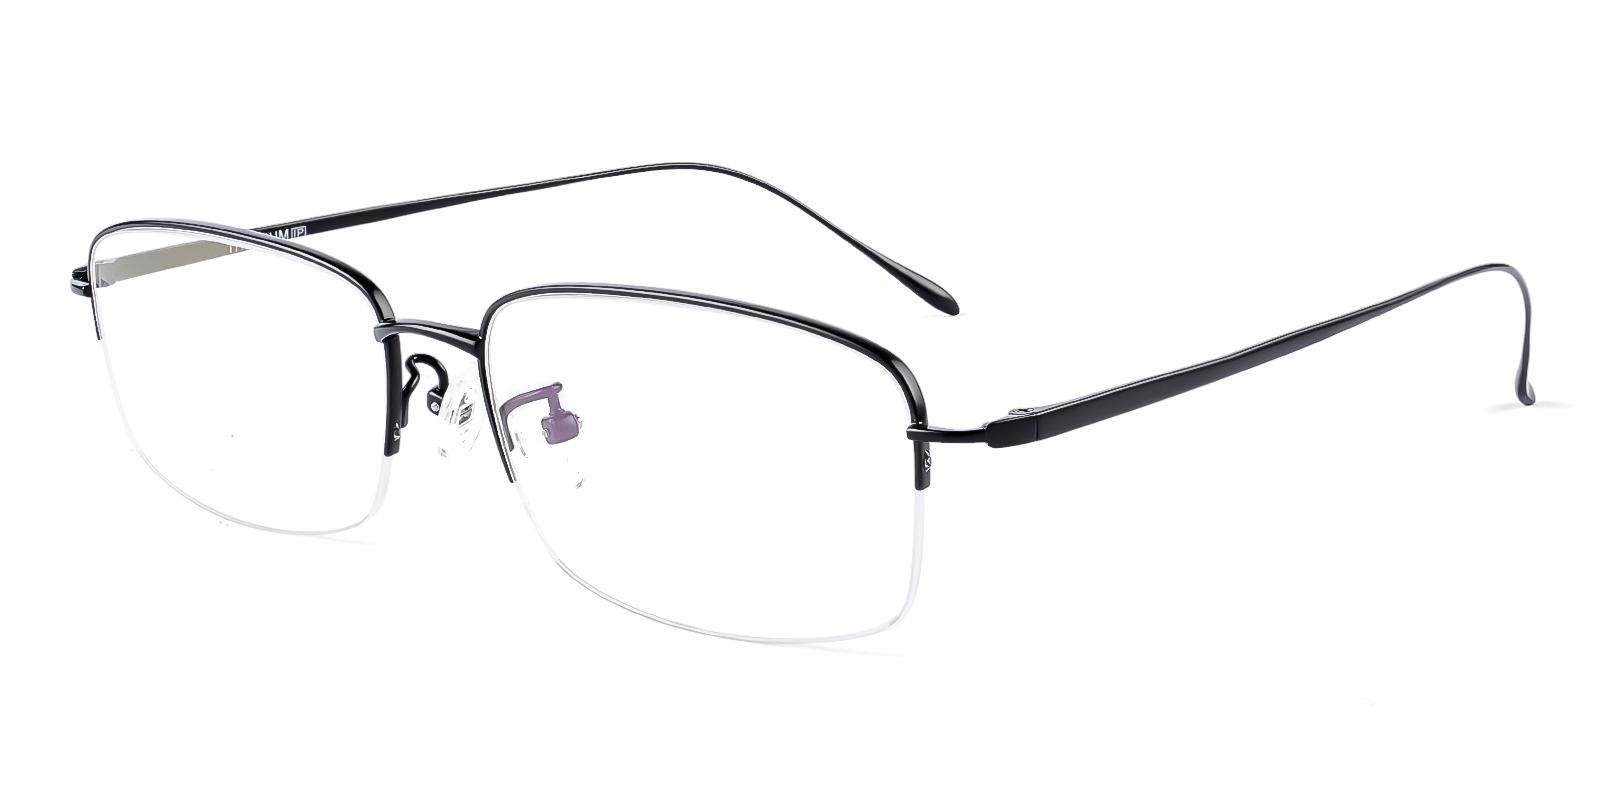 Indeedory Black Titanium Eyeglasses , NosePads Frames from ABBE Glasses